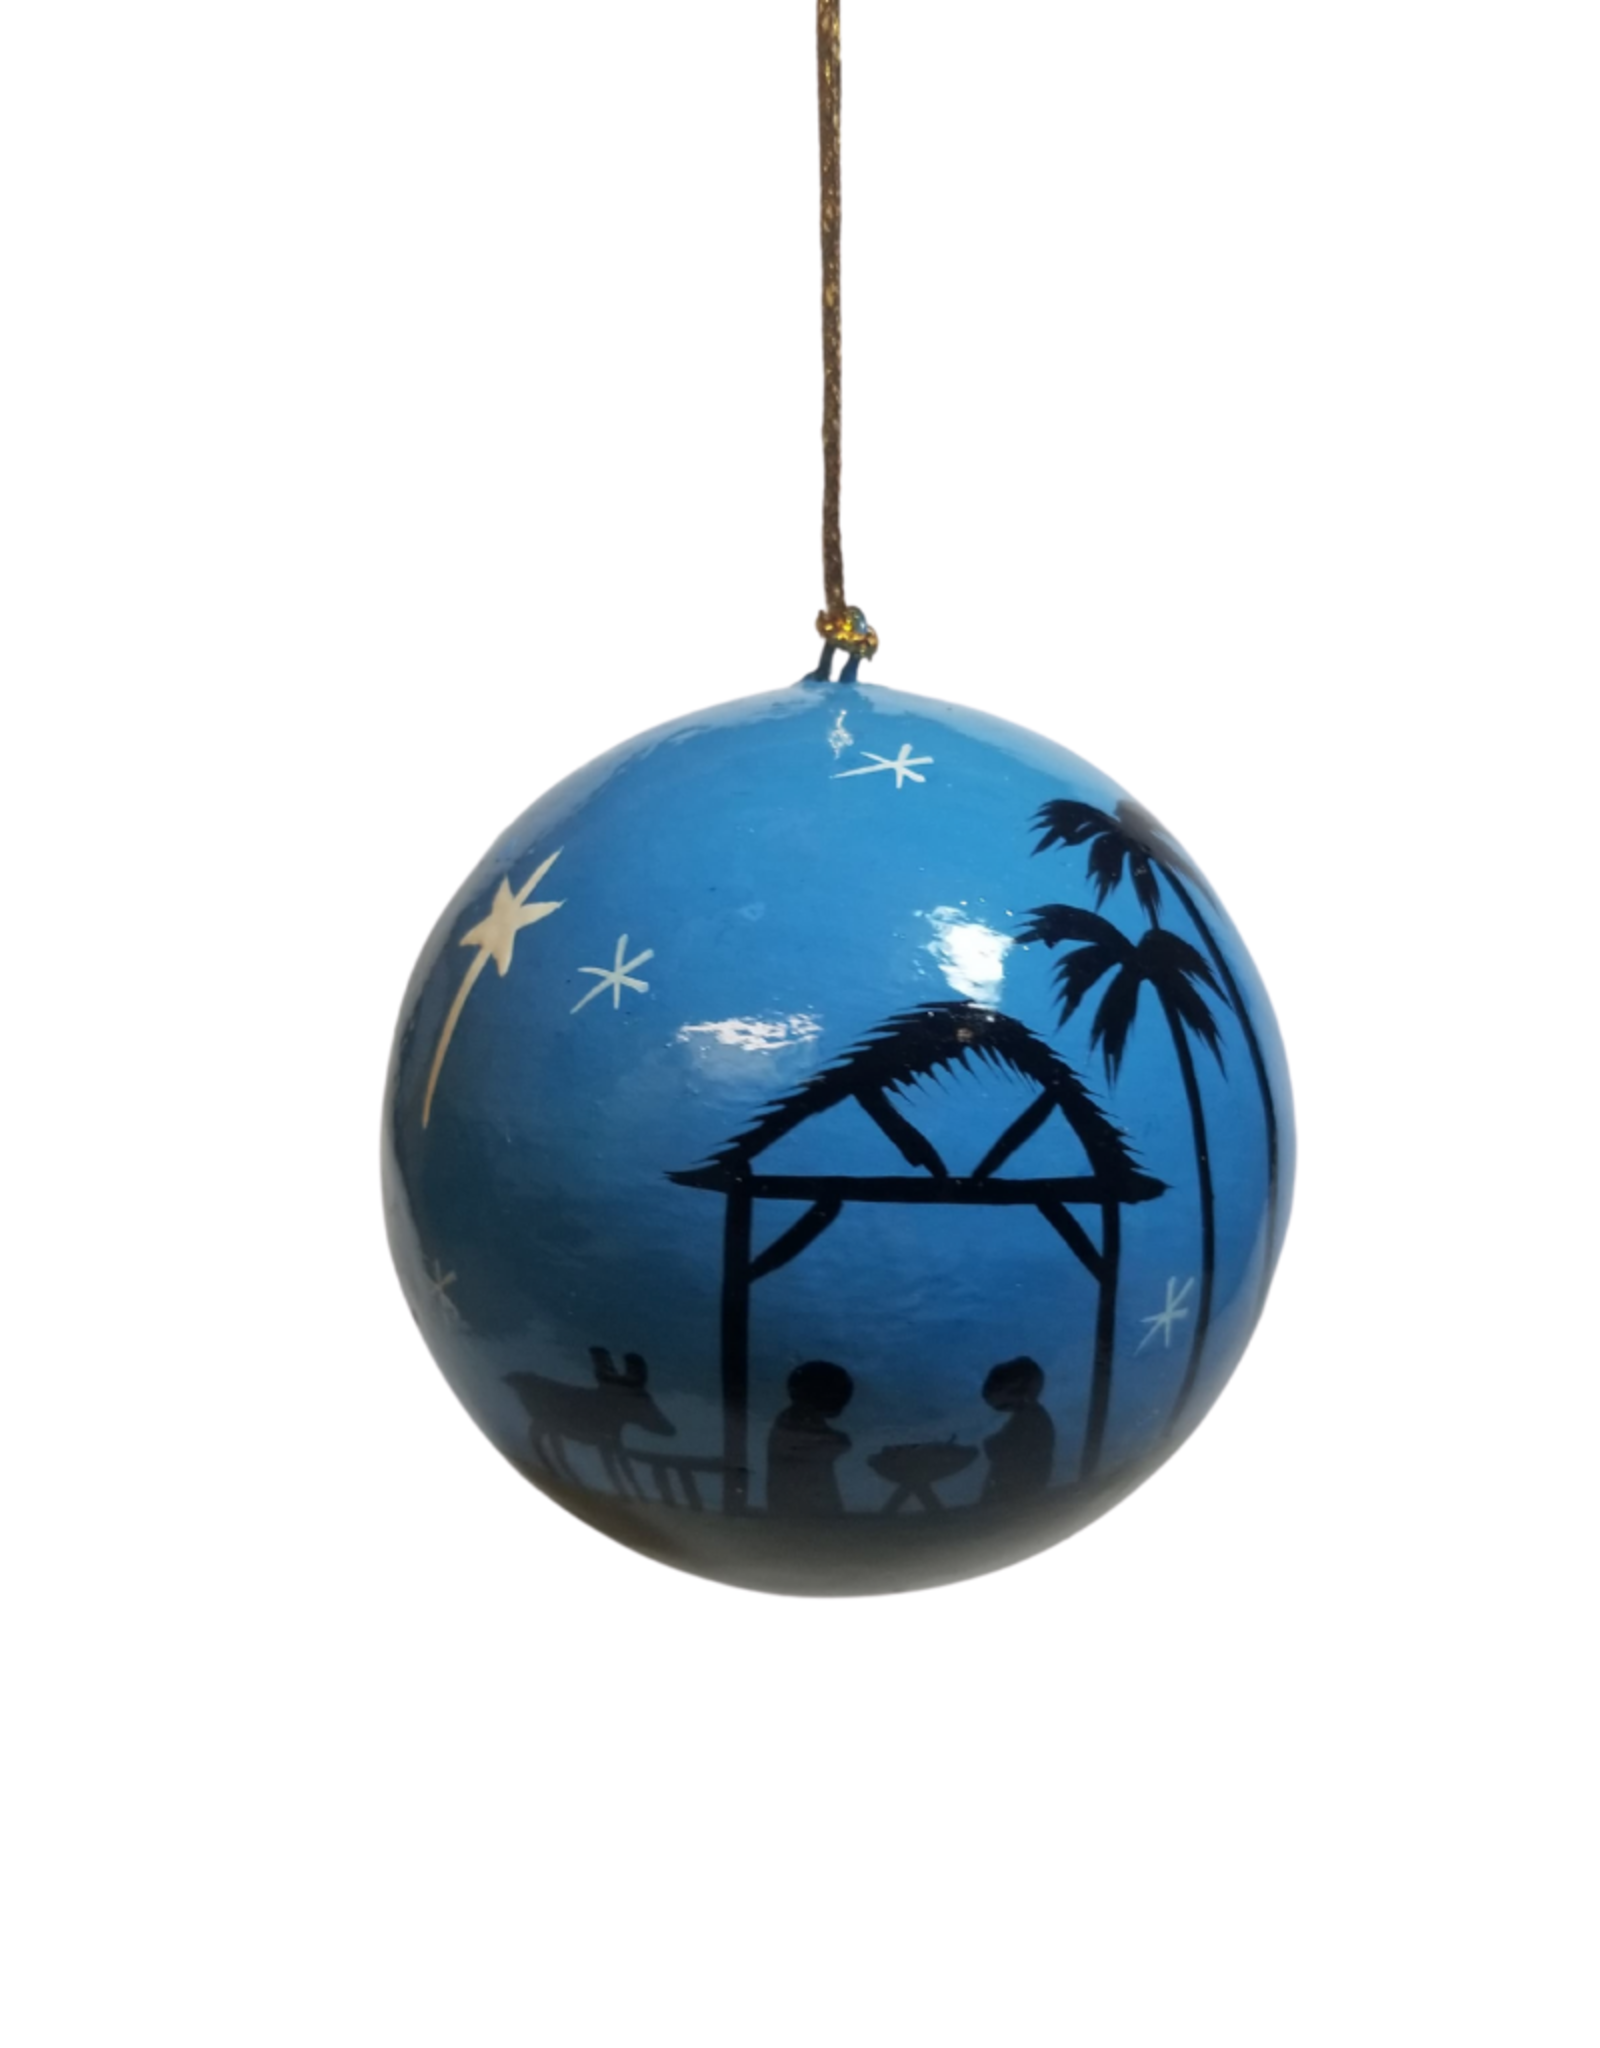 Global Crafts Handpainted Christmas Nativity Ornament